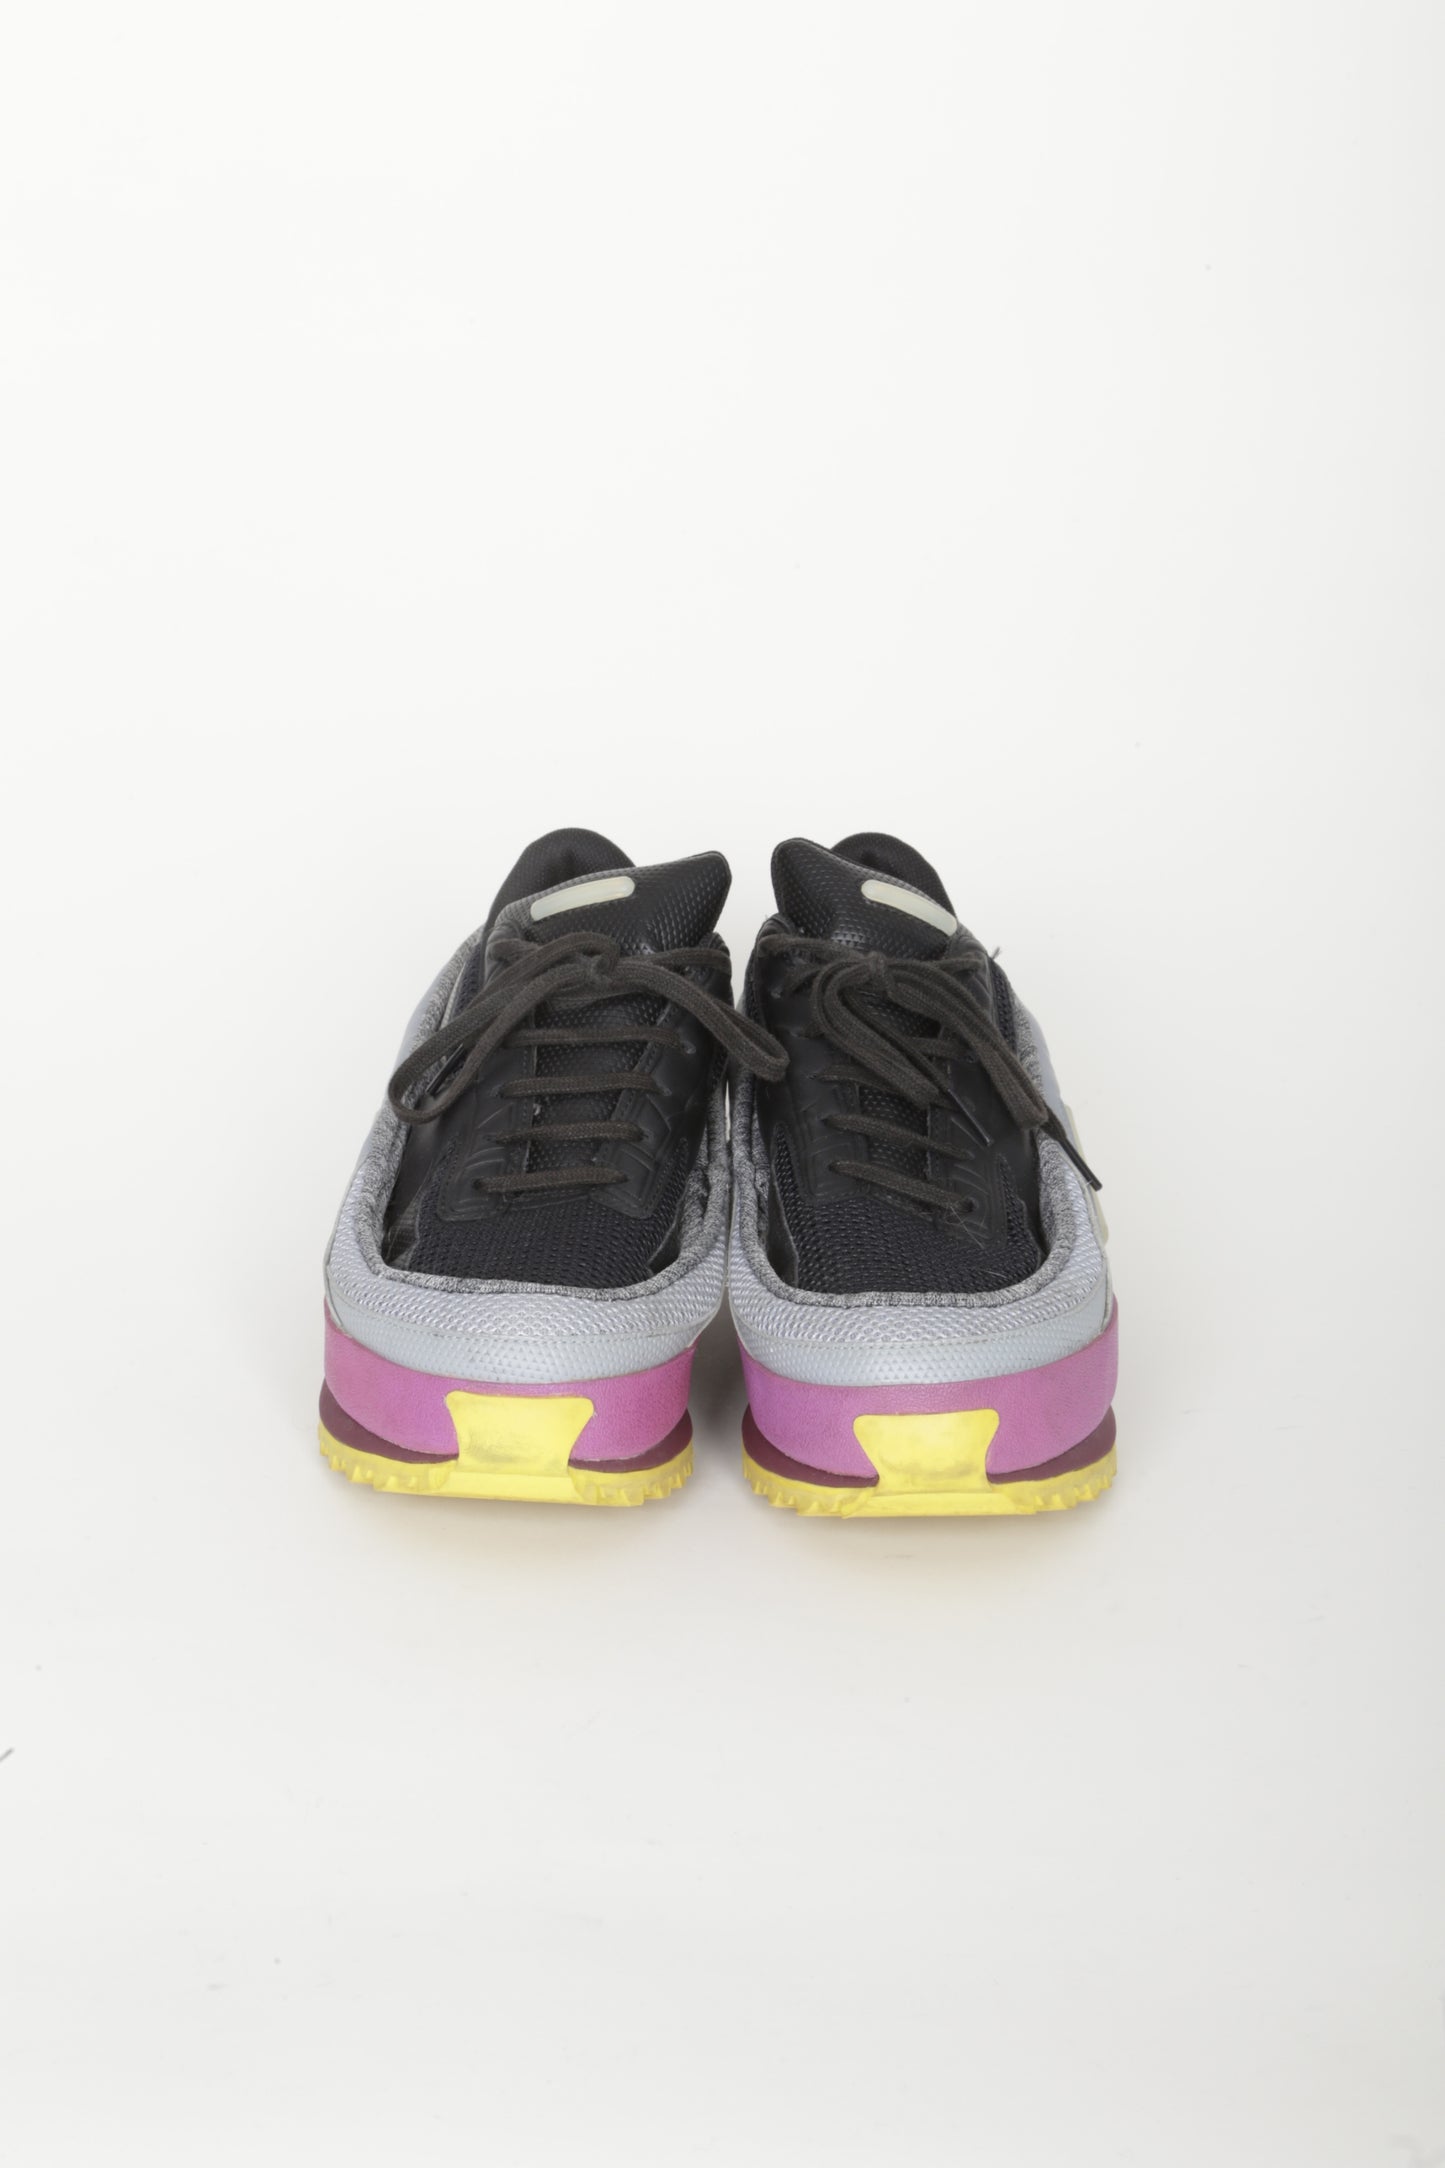 Raf Simons x Adidas Mens Black Shoes Size UK 8